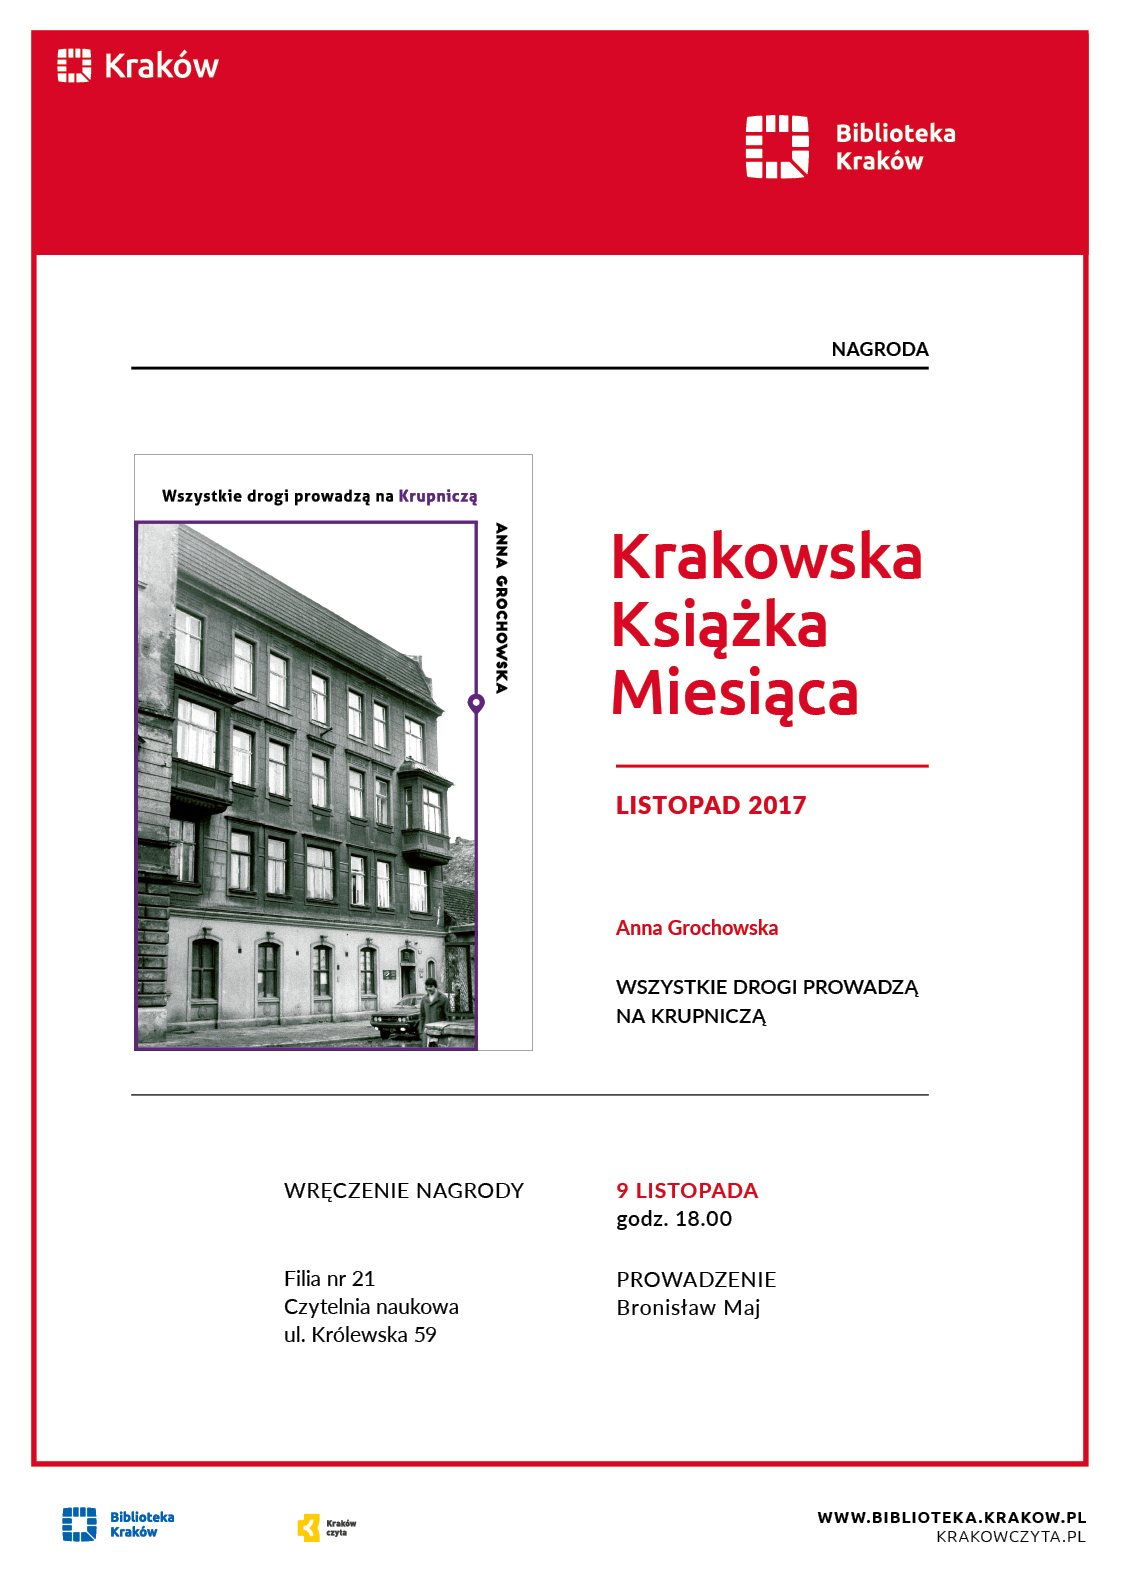 Krakowska Książka Miesiąca – plakat (źródło: materiały prasowe organizatora)